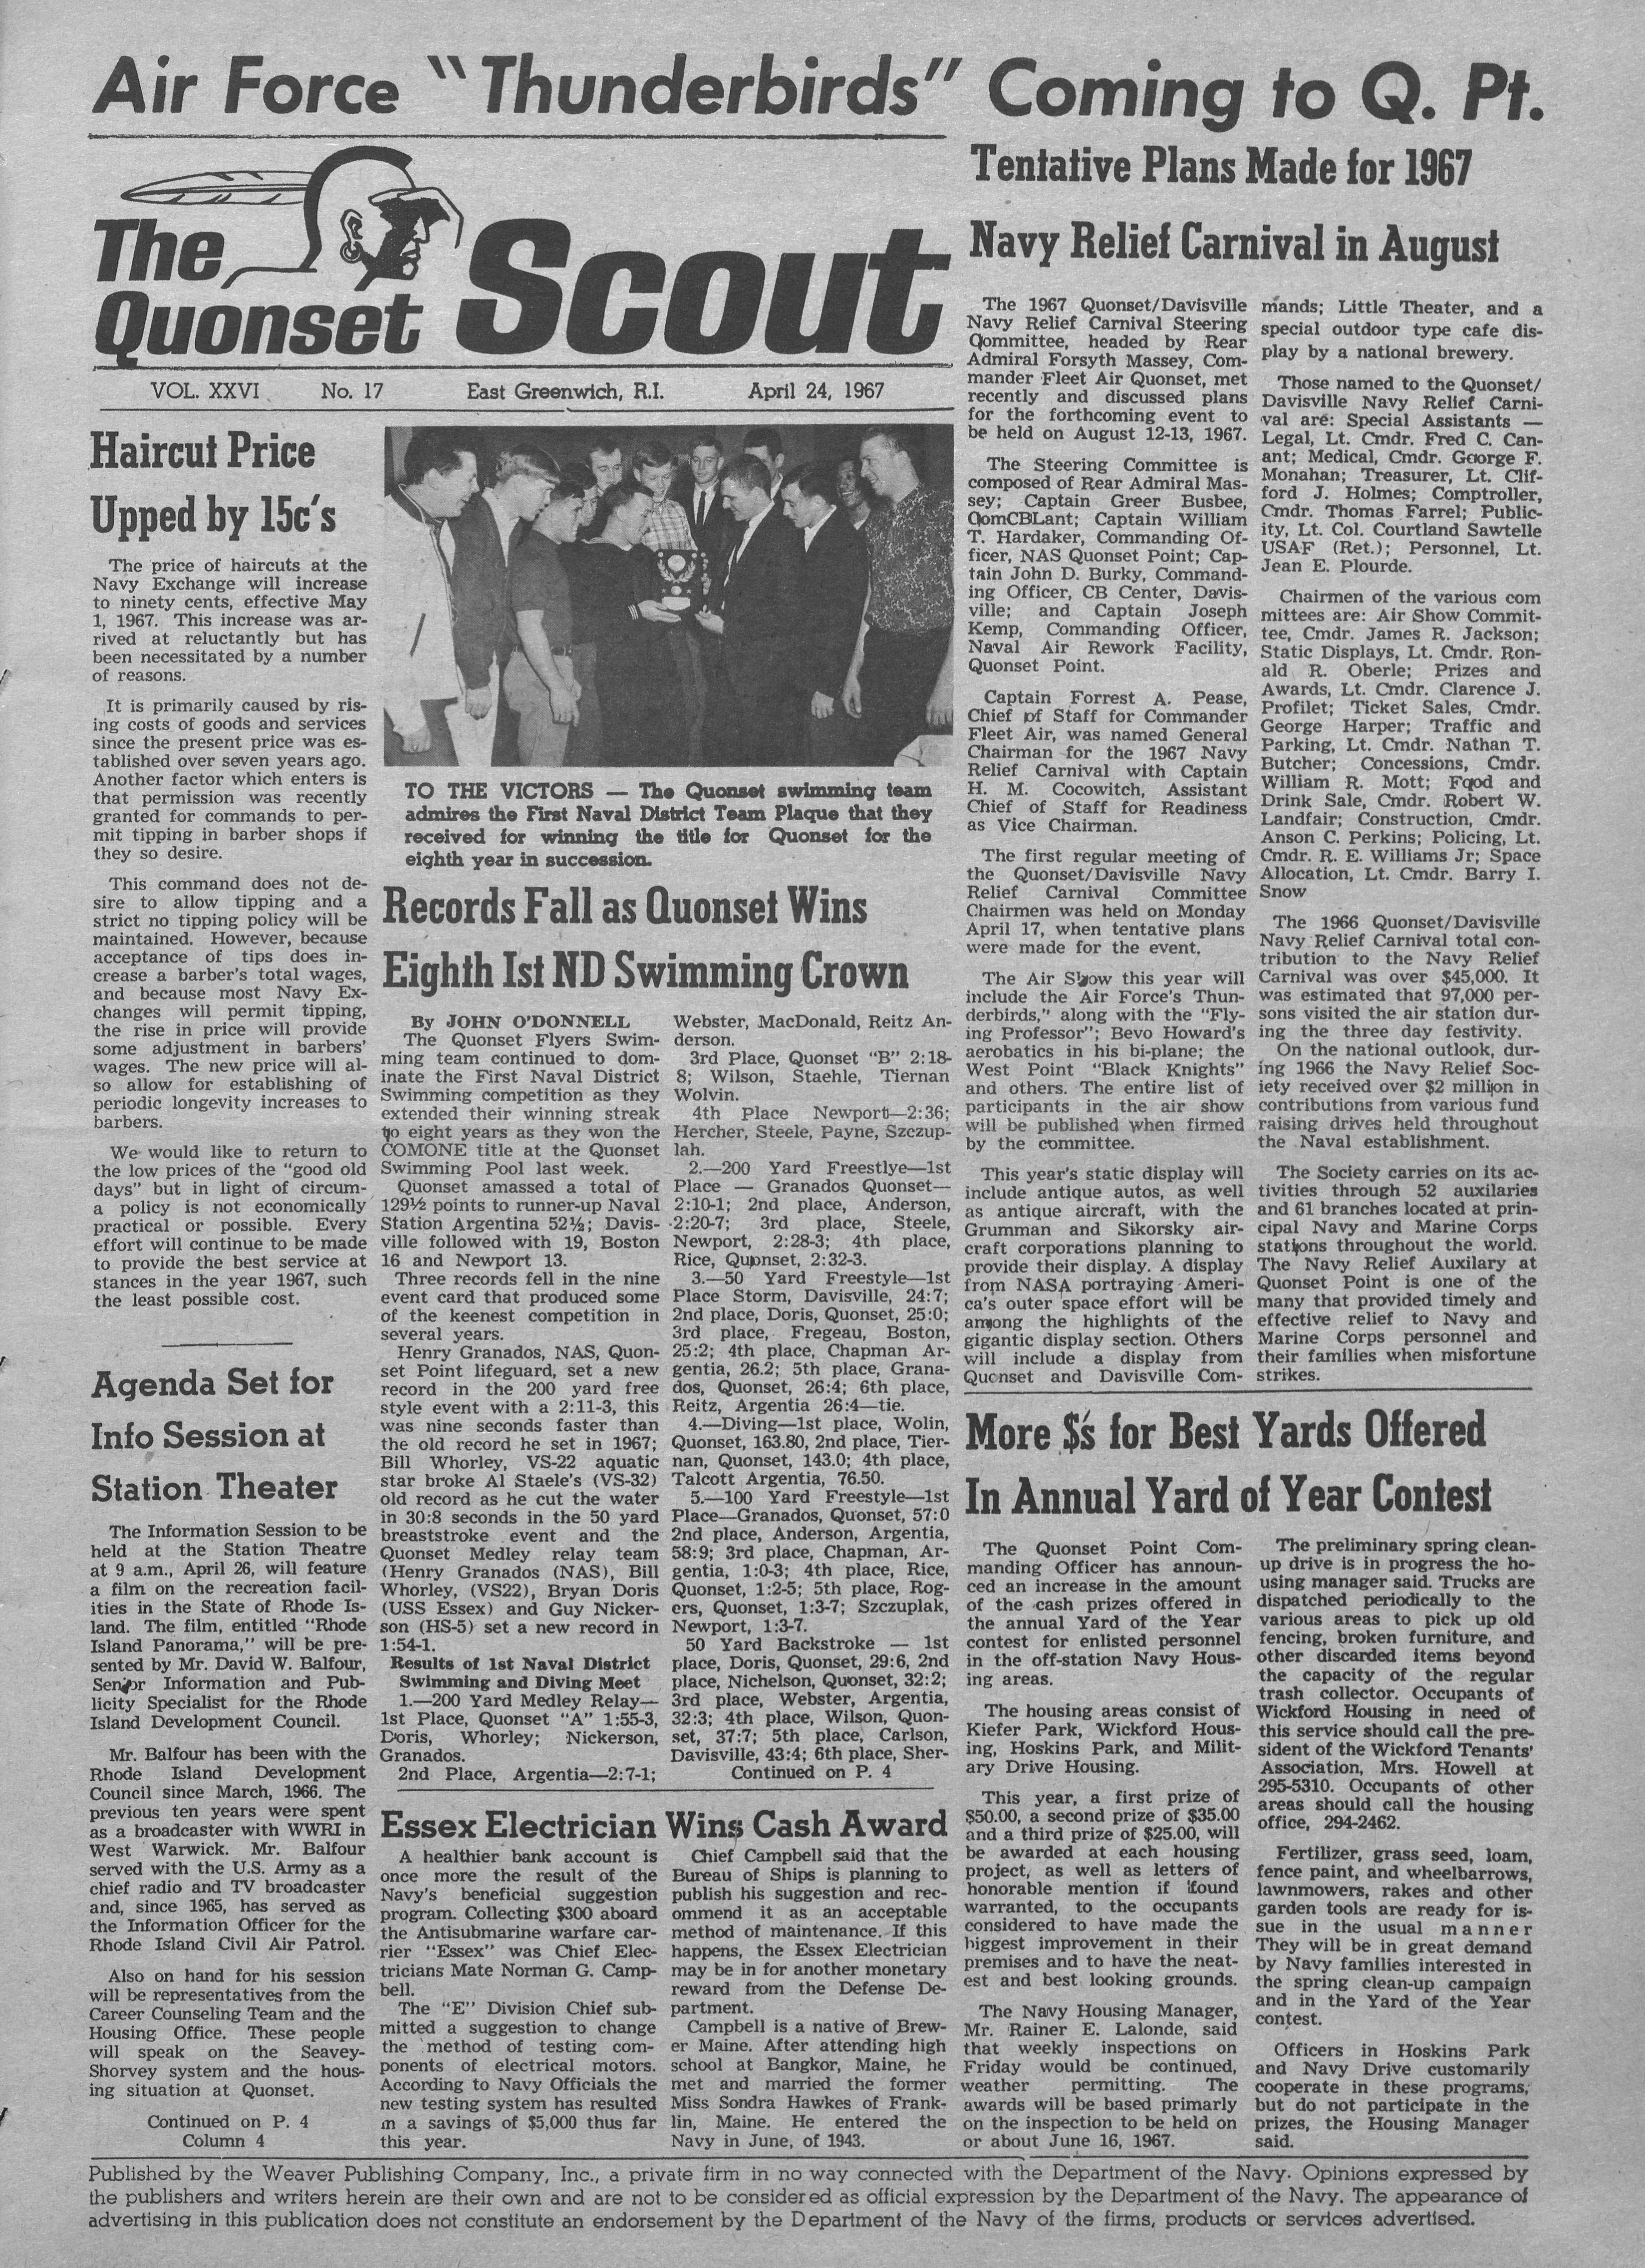 April 24, 1967